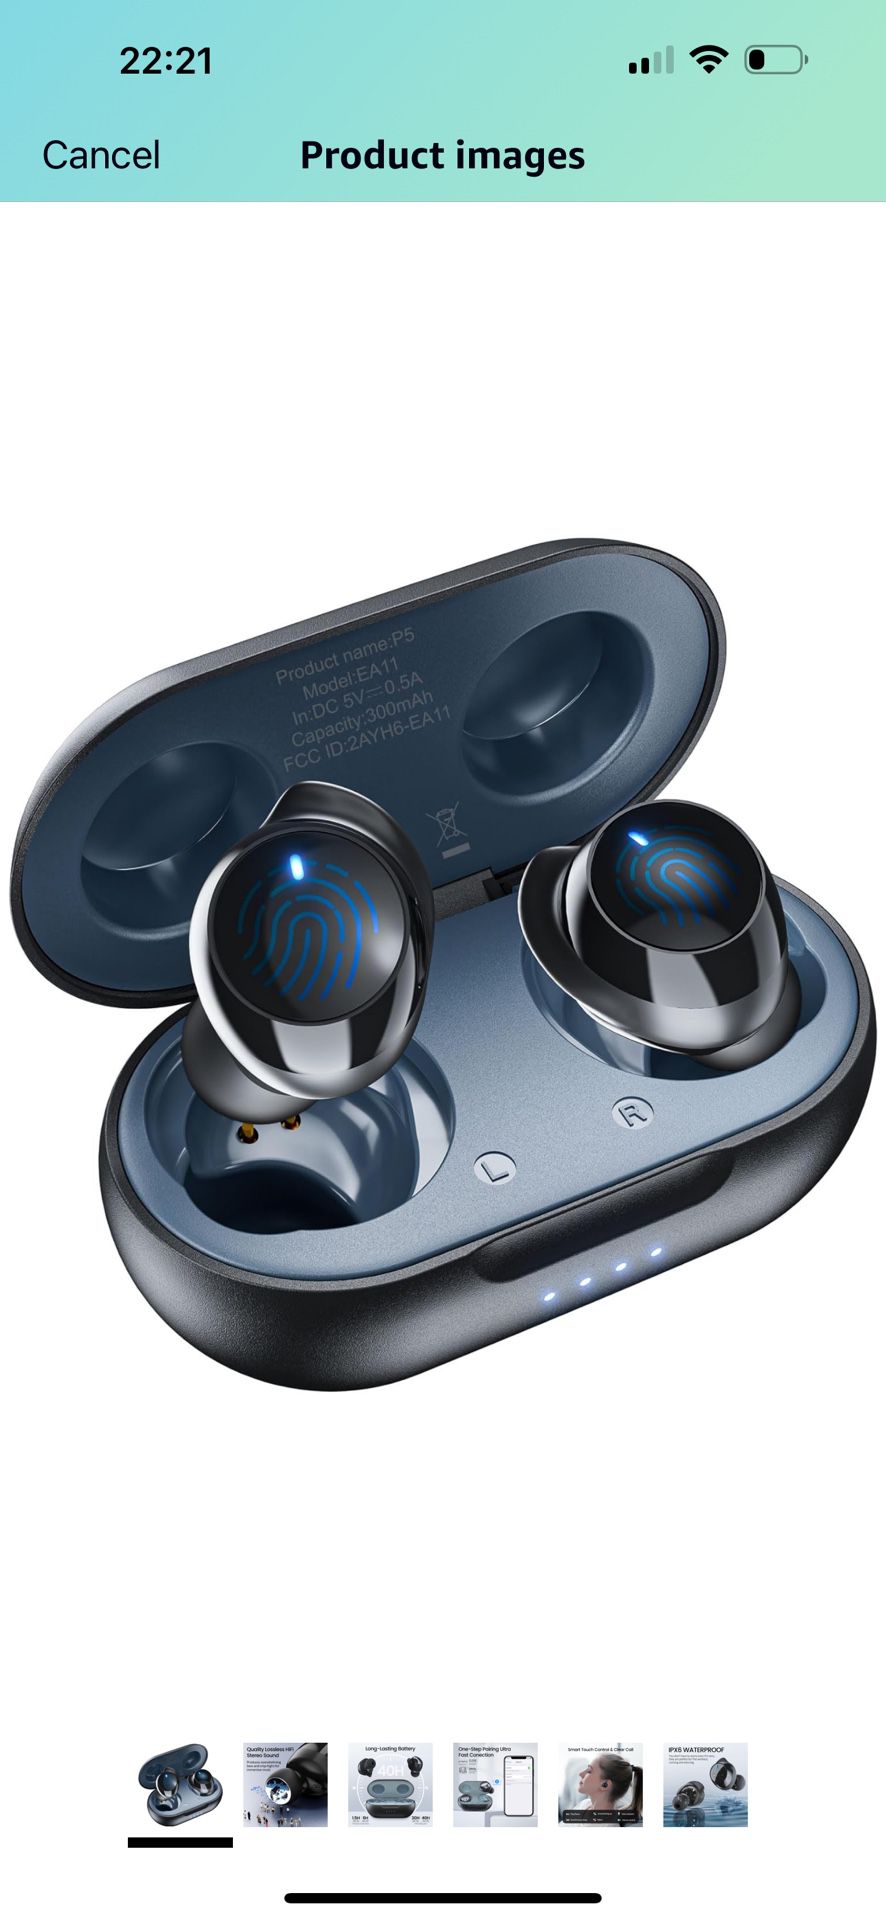 Brand New Bluetooth Wireless Ear Buds, IPX6 Waterproof in Ear Headphones with Built-in Microphone,